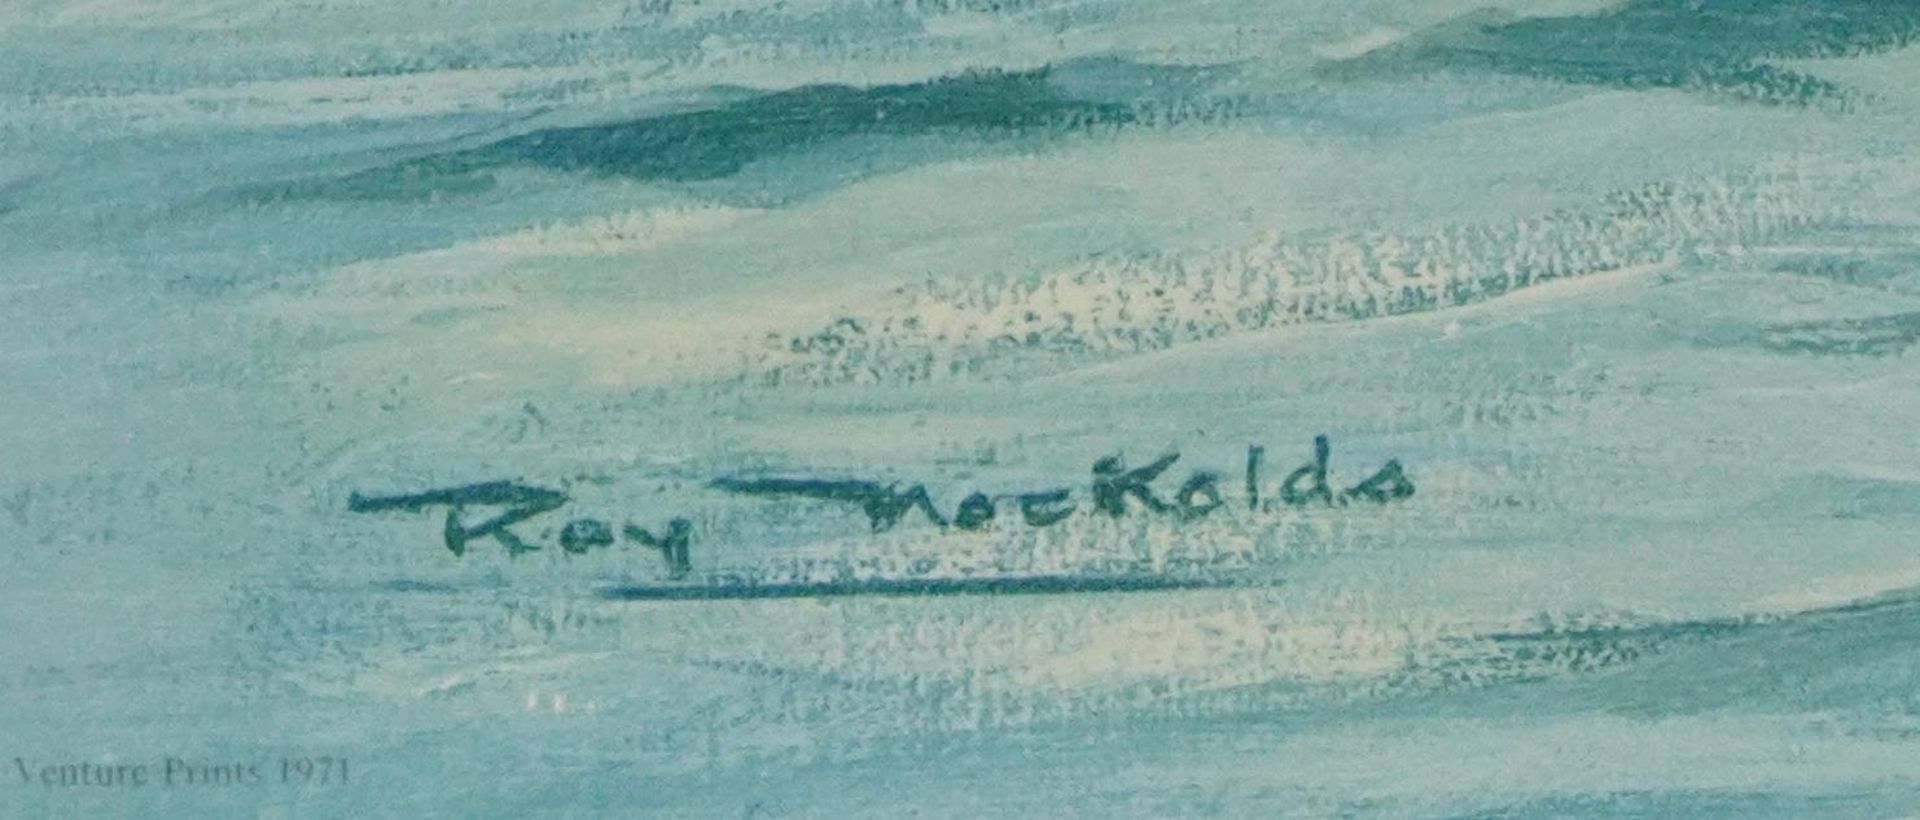 Roy Nockolds - Fishermen in a river, pencil signed print, Venture Prints 1971, embossed watermark, - Image 3 of 6